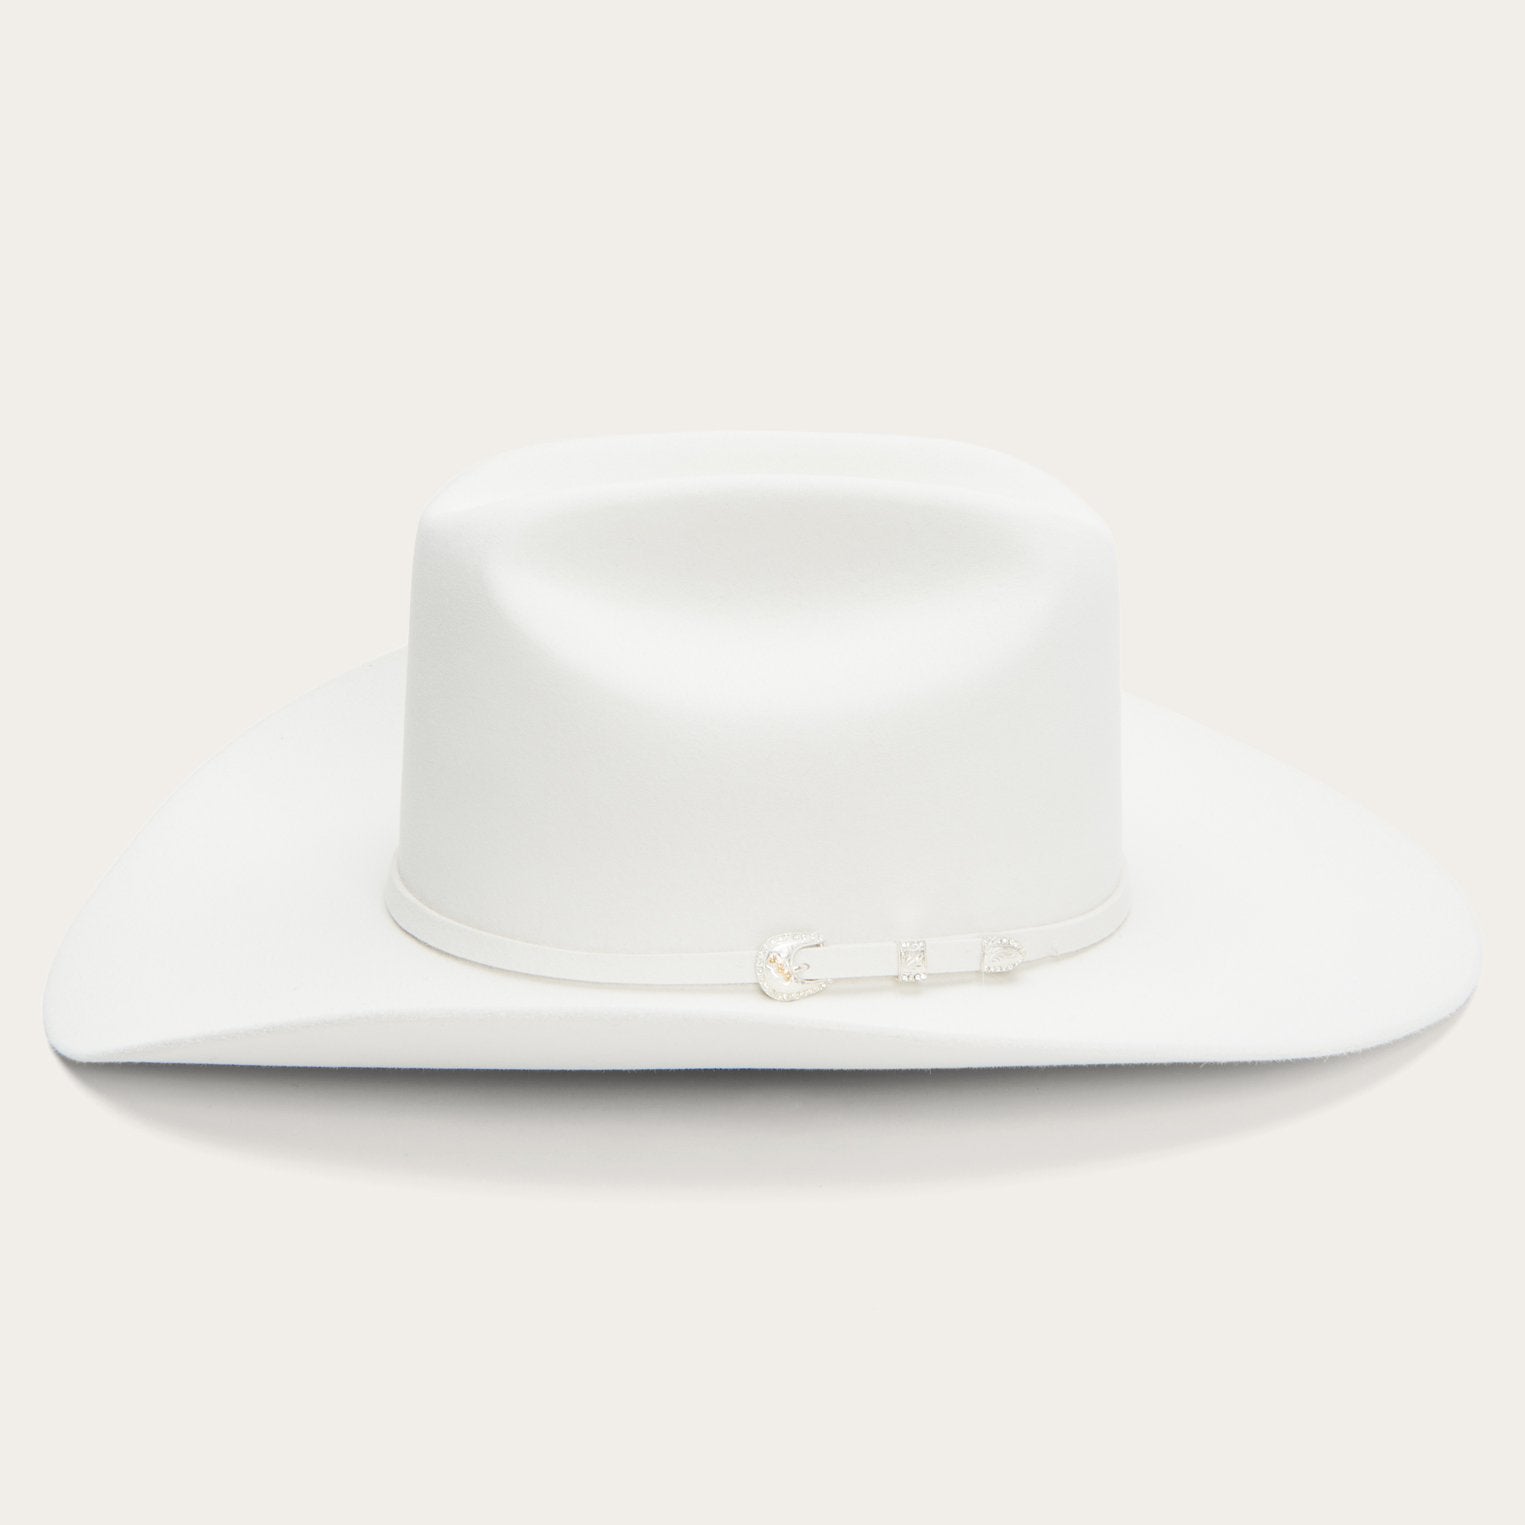 Stetson The Rawlins Cowboy Hat - Exclusive - Oak, Western Hats